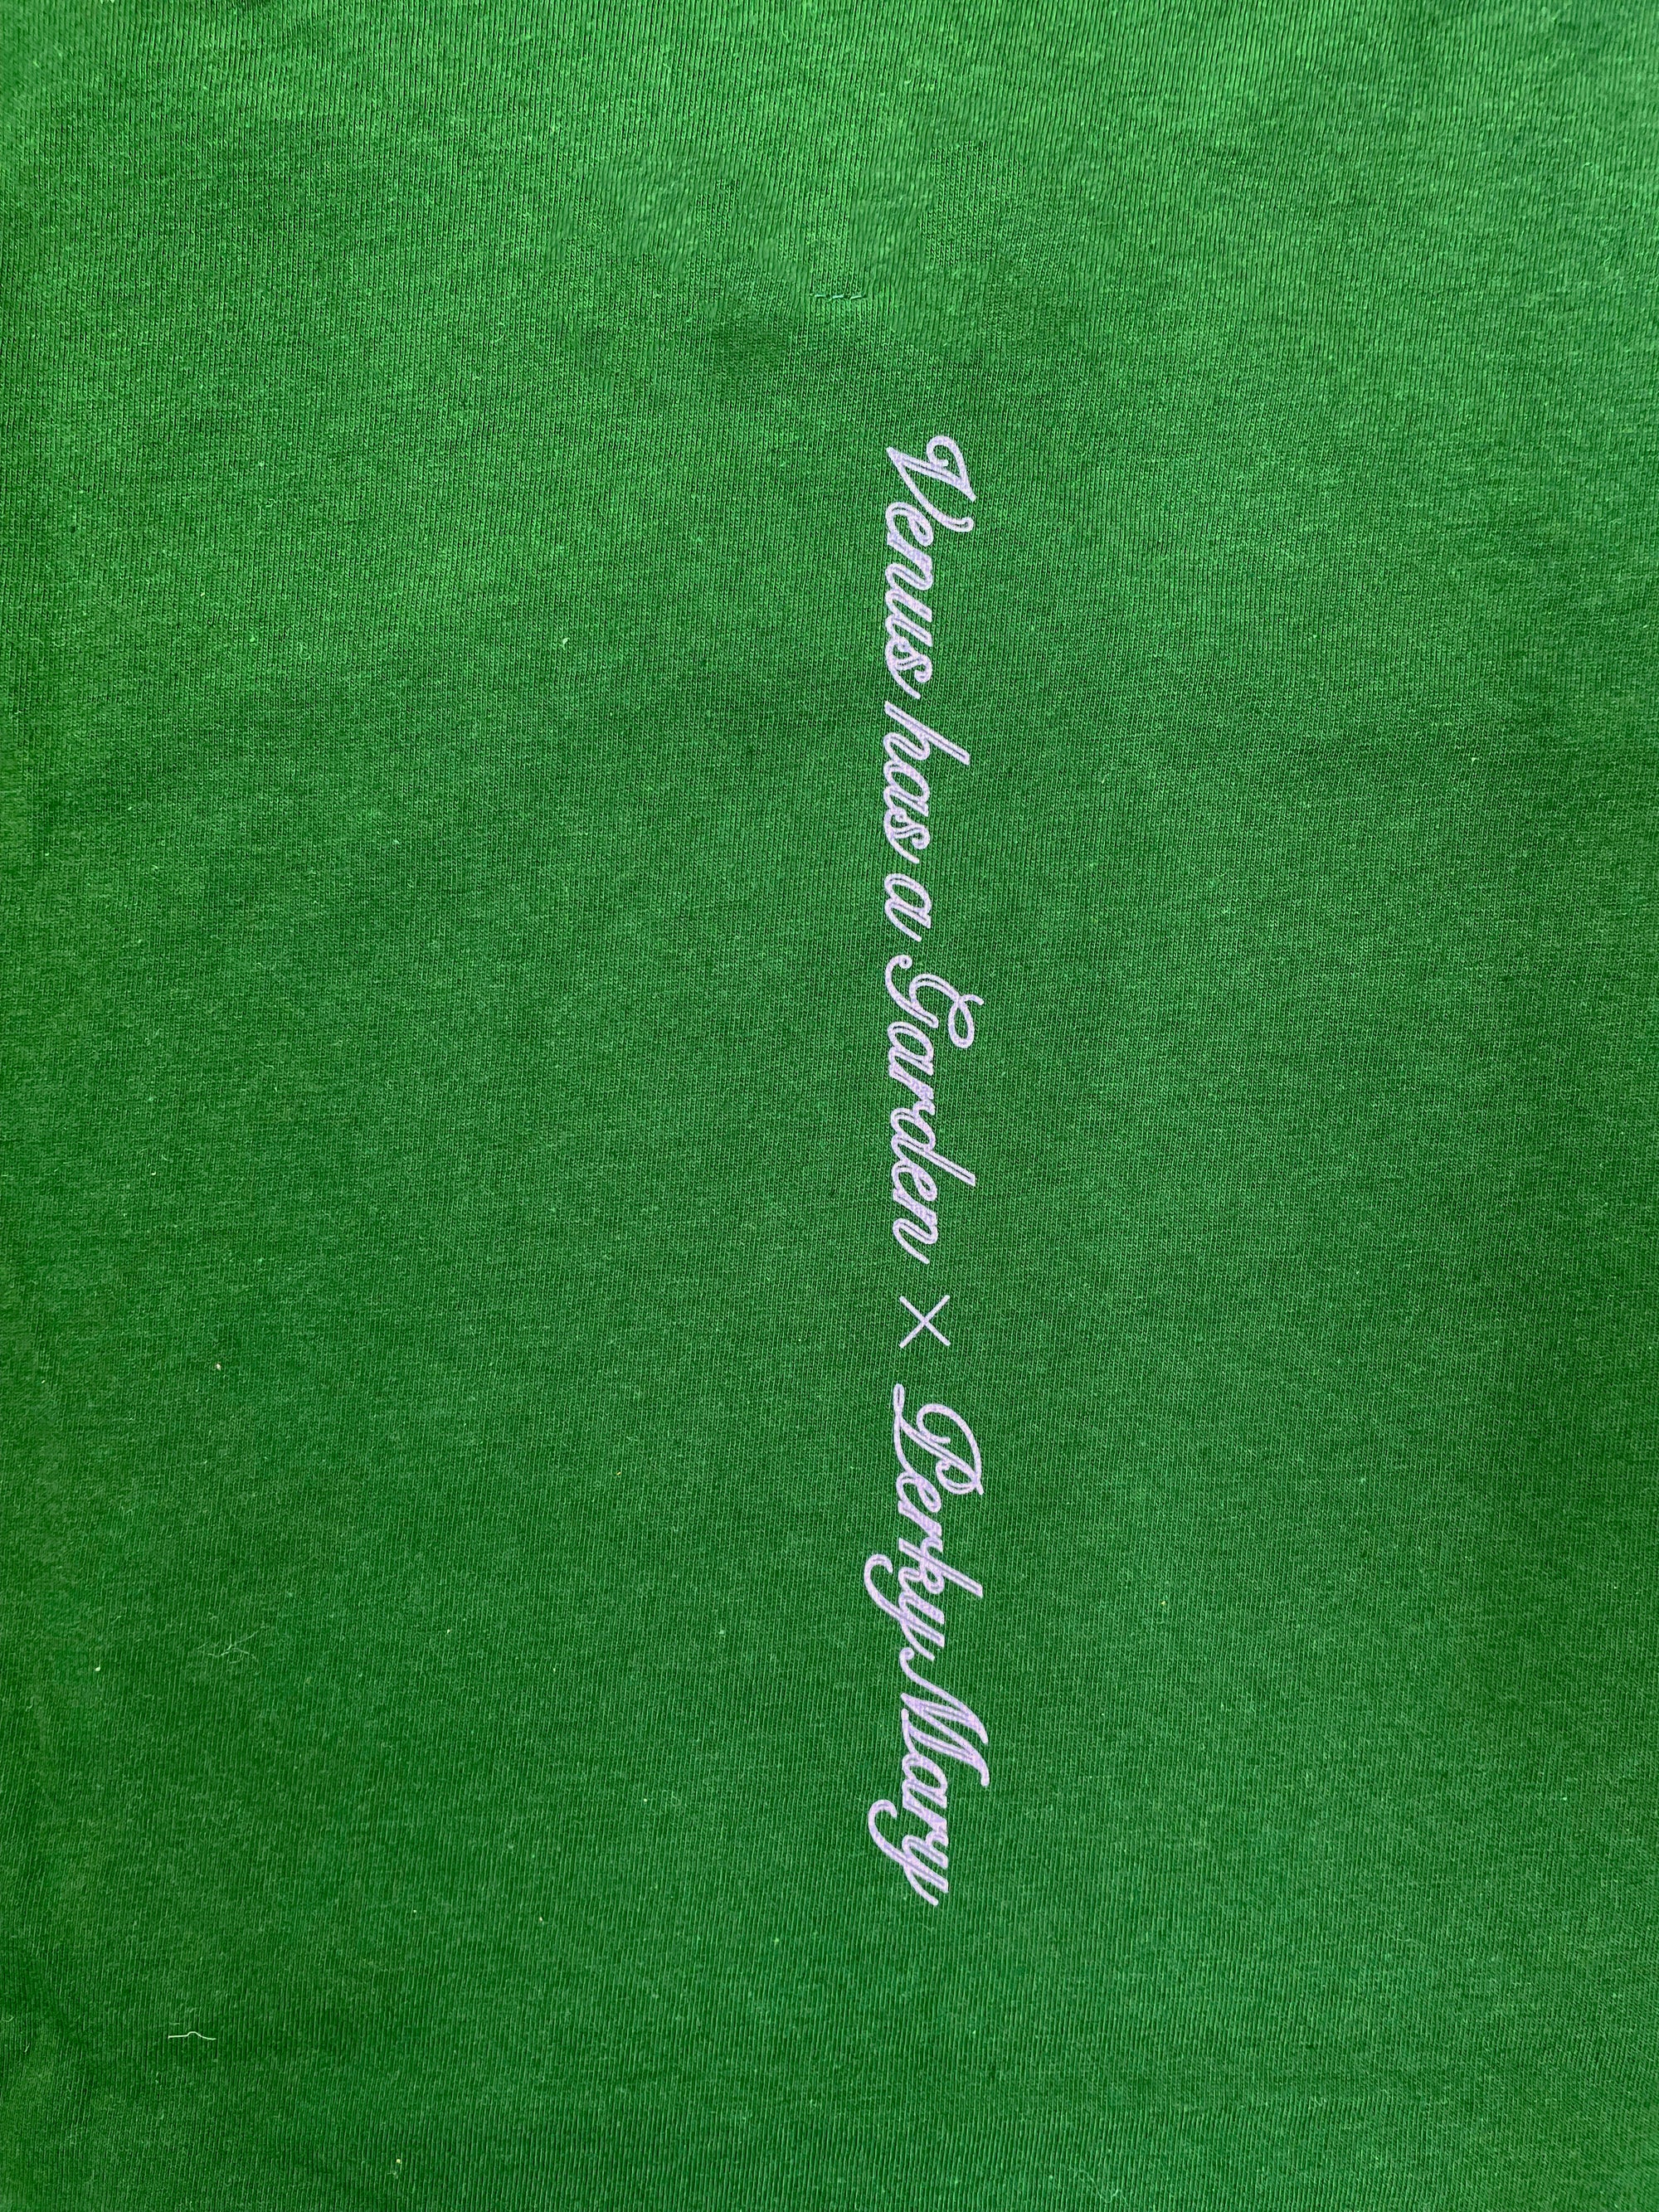 Green VhaGxPM T-Shirt